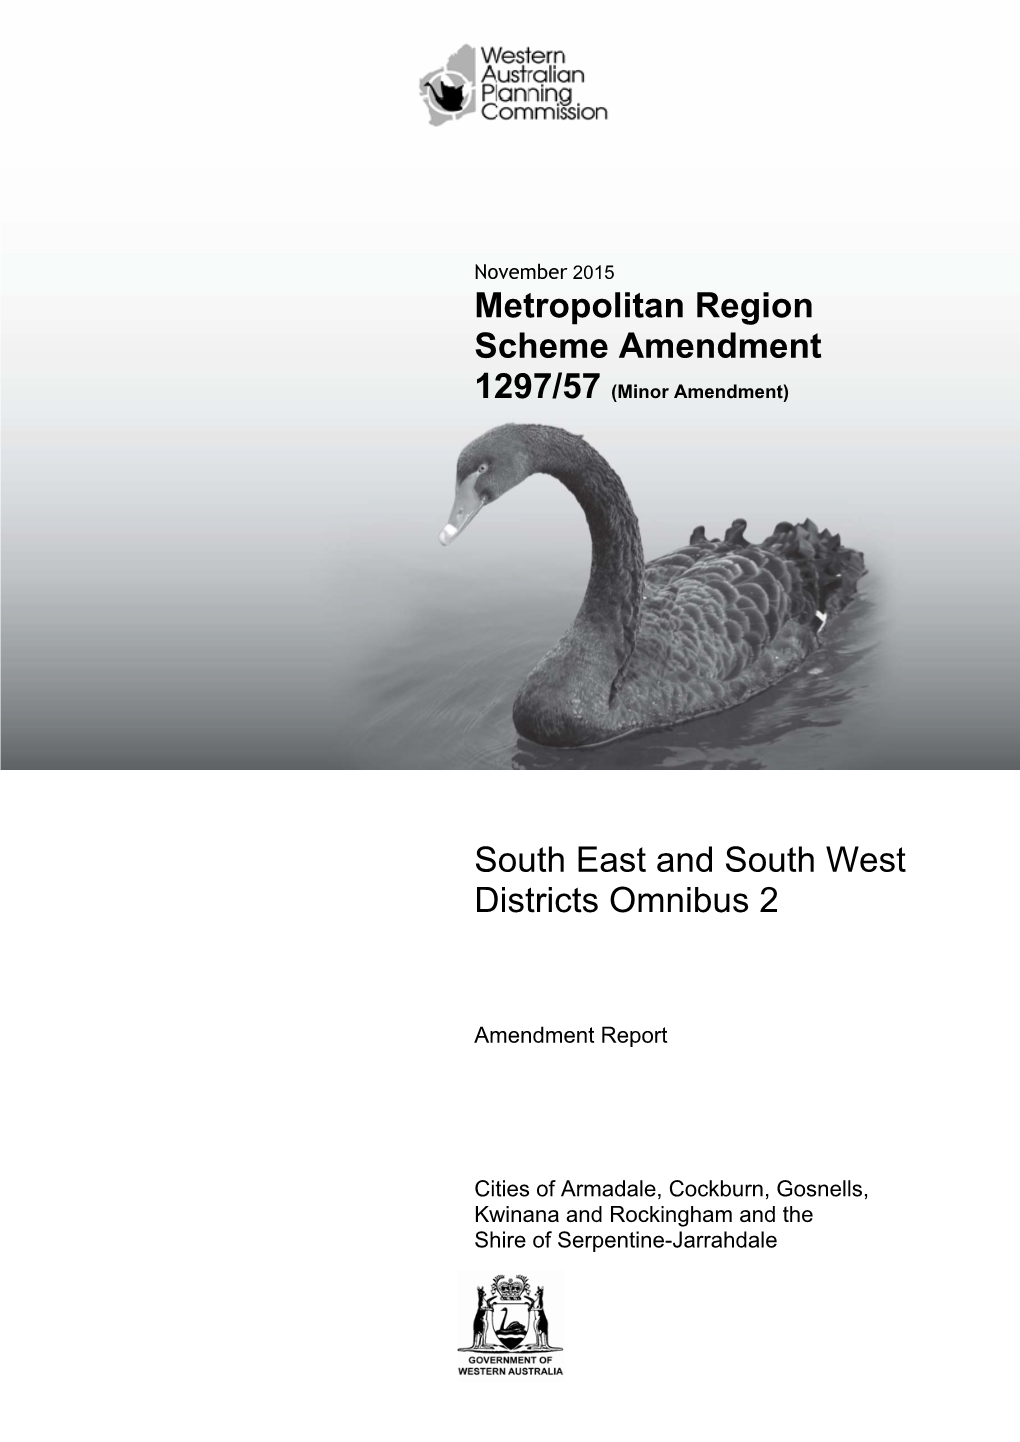 Metropolitan Region Scheme Minor Amendment 1297/57